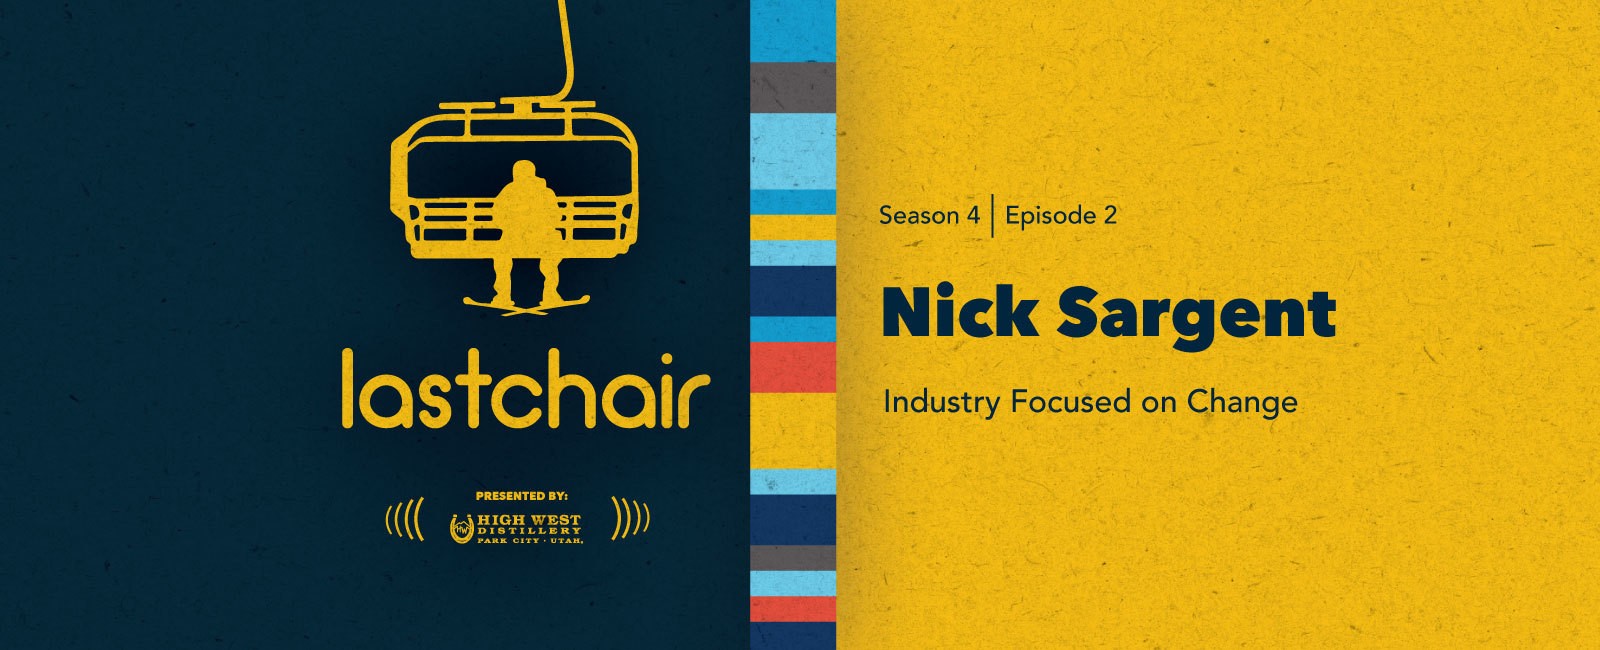 Nick Sargent: Industry Focused on Change